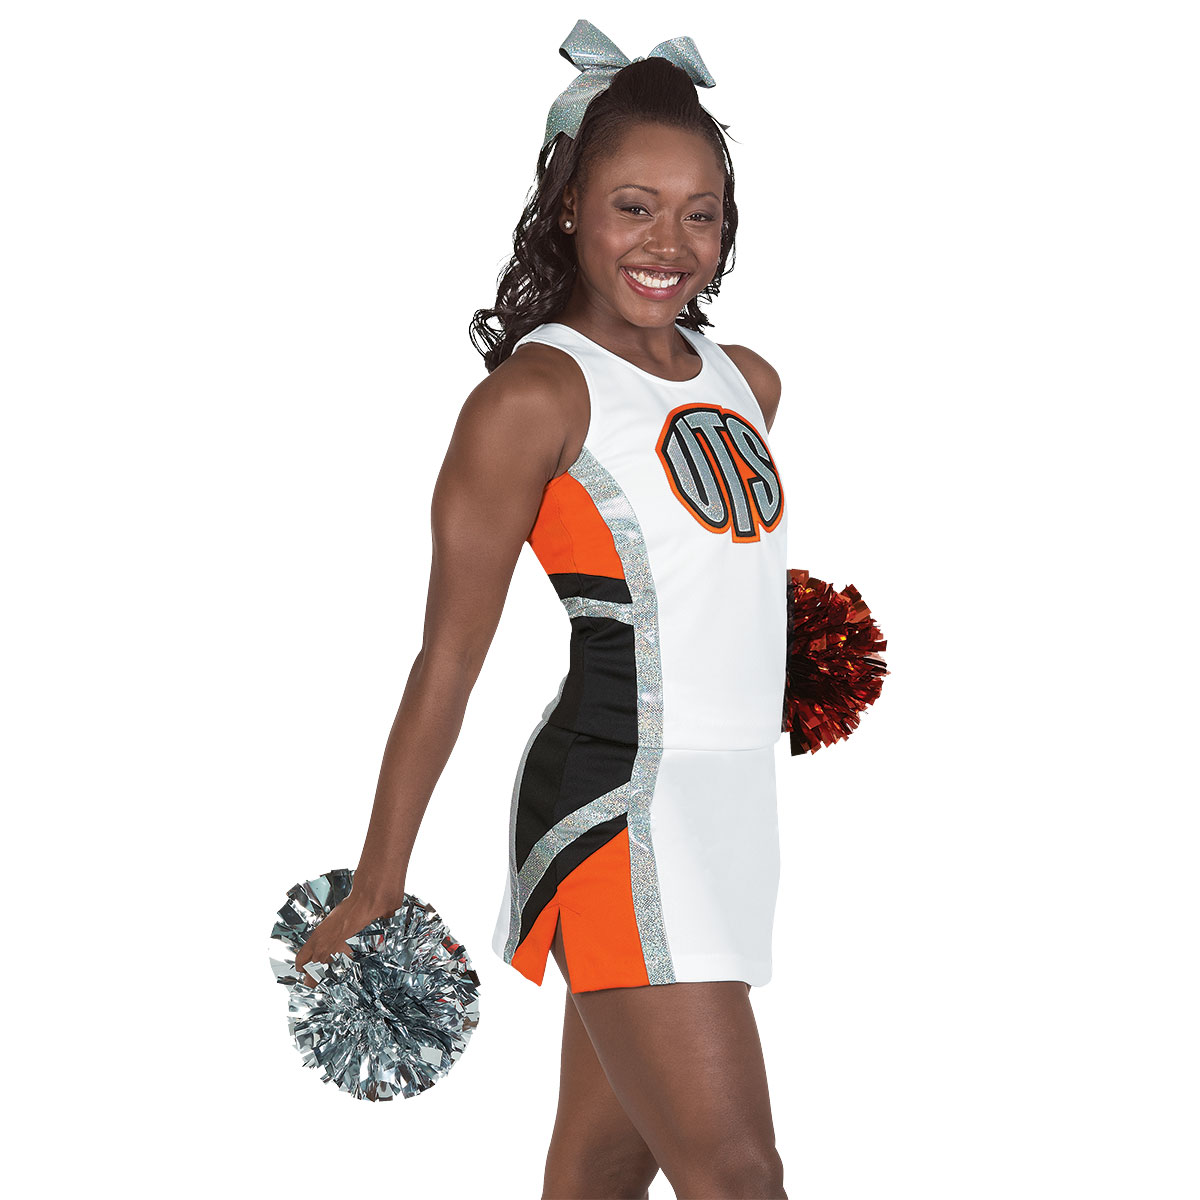 Total 33+ imagen custom cheerleader outfit - Abzlocal.mx